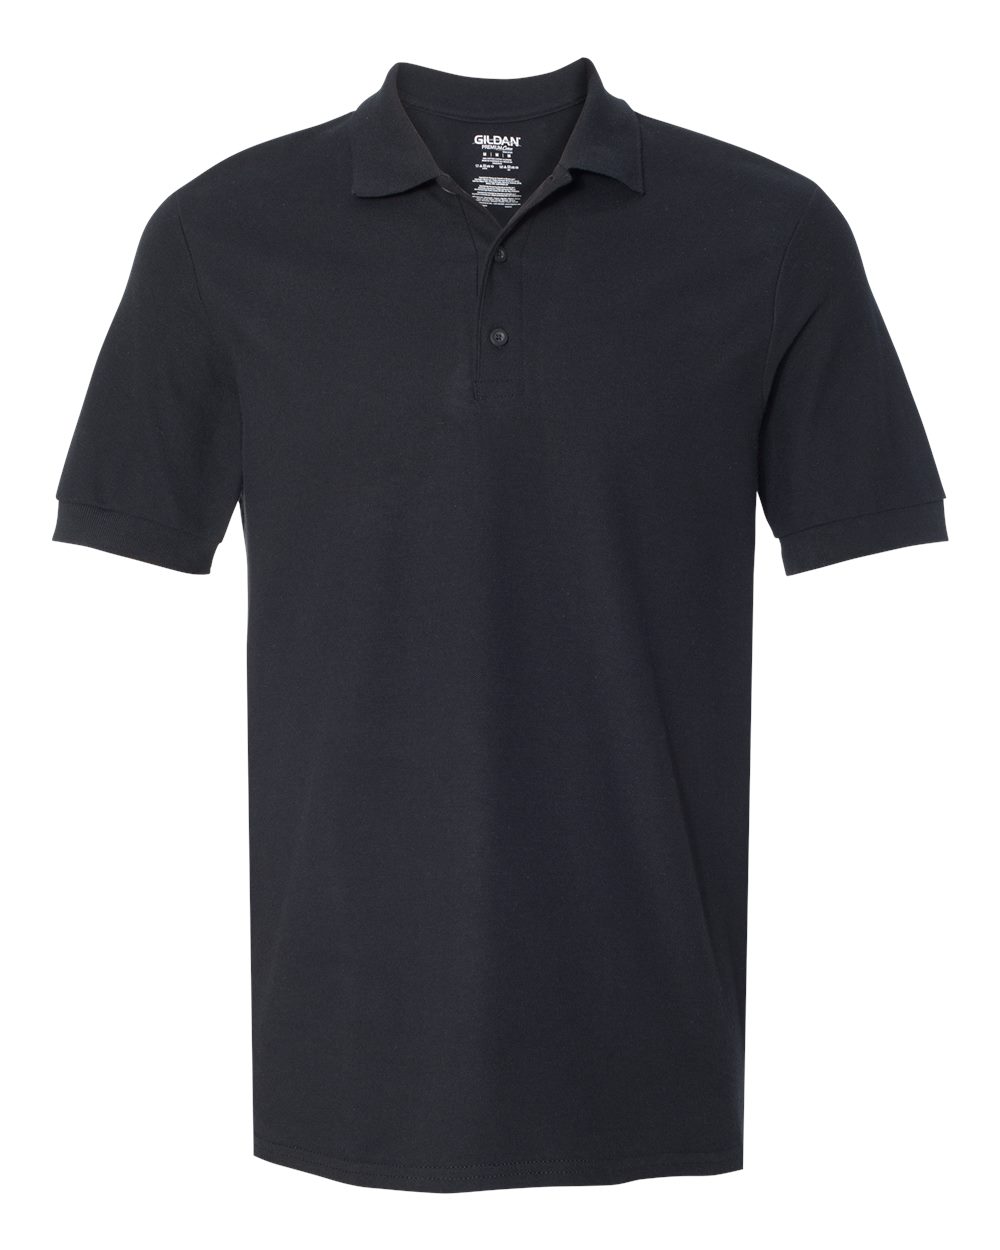 Gildan Premium Cotton Double Pique Sport Shirt - SHIRT PRINTING 4U